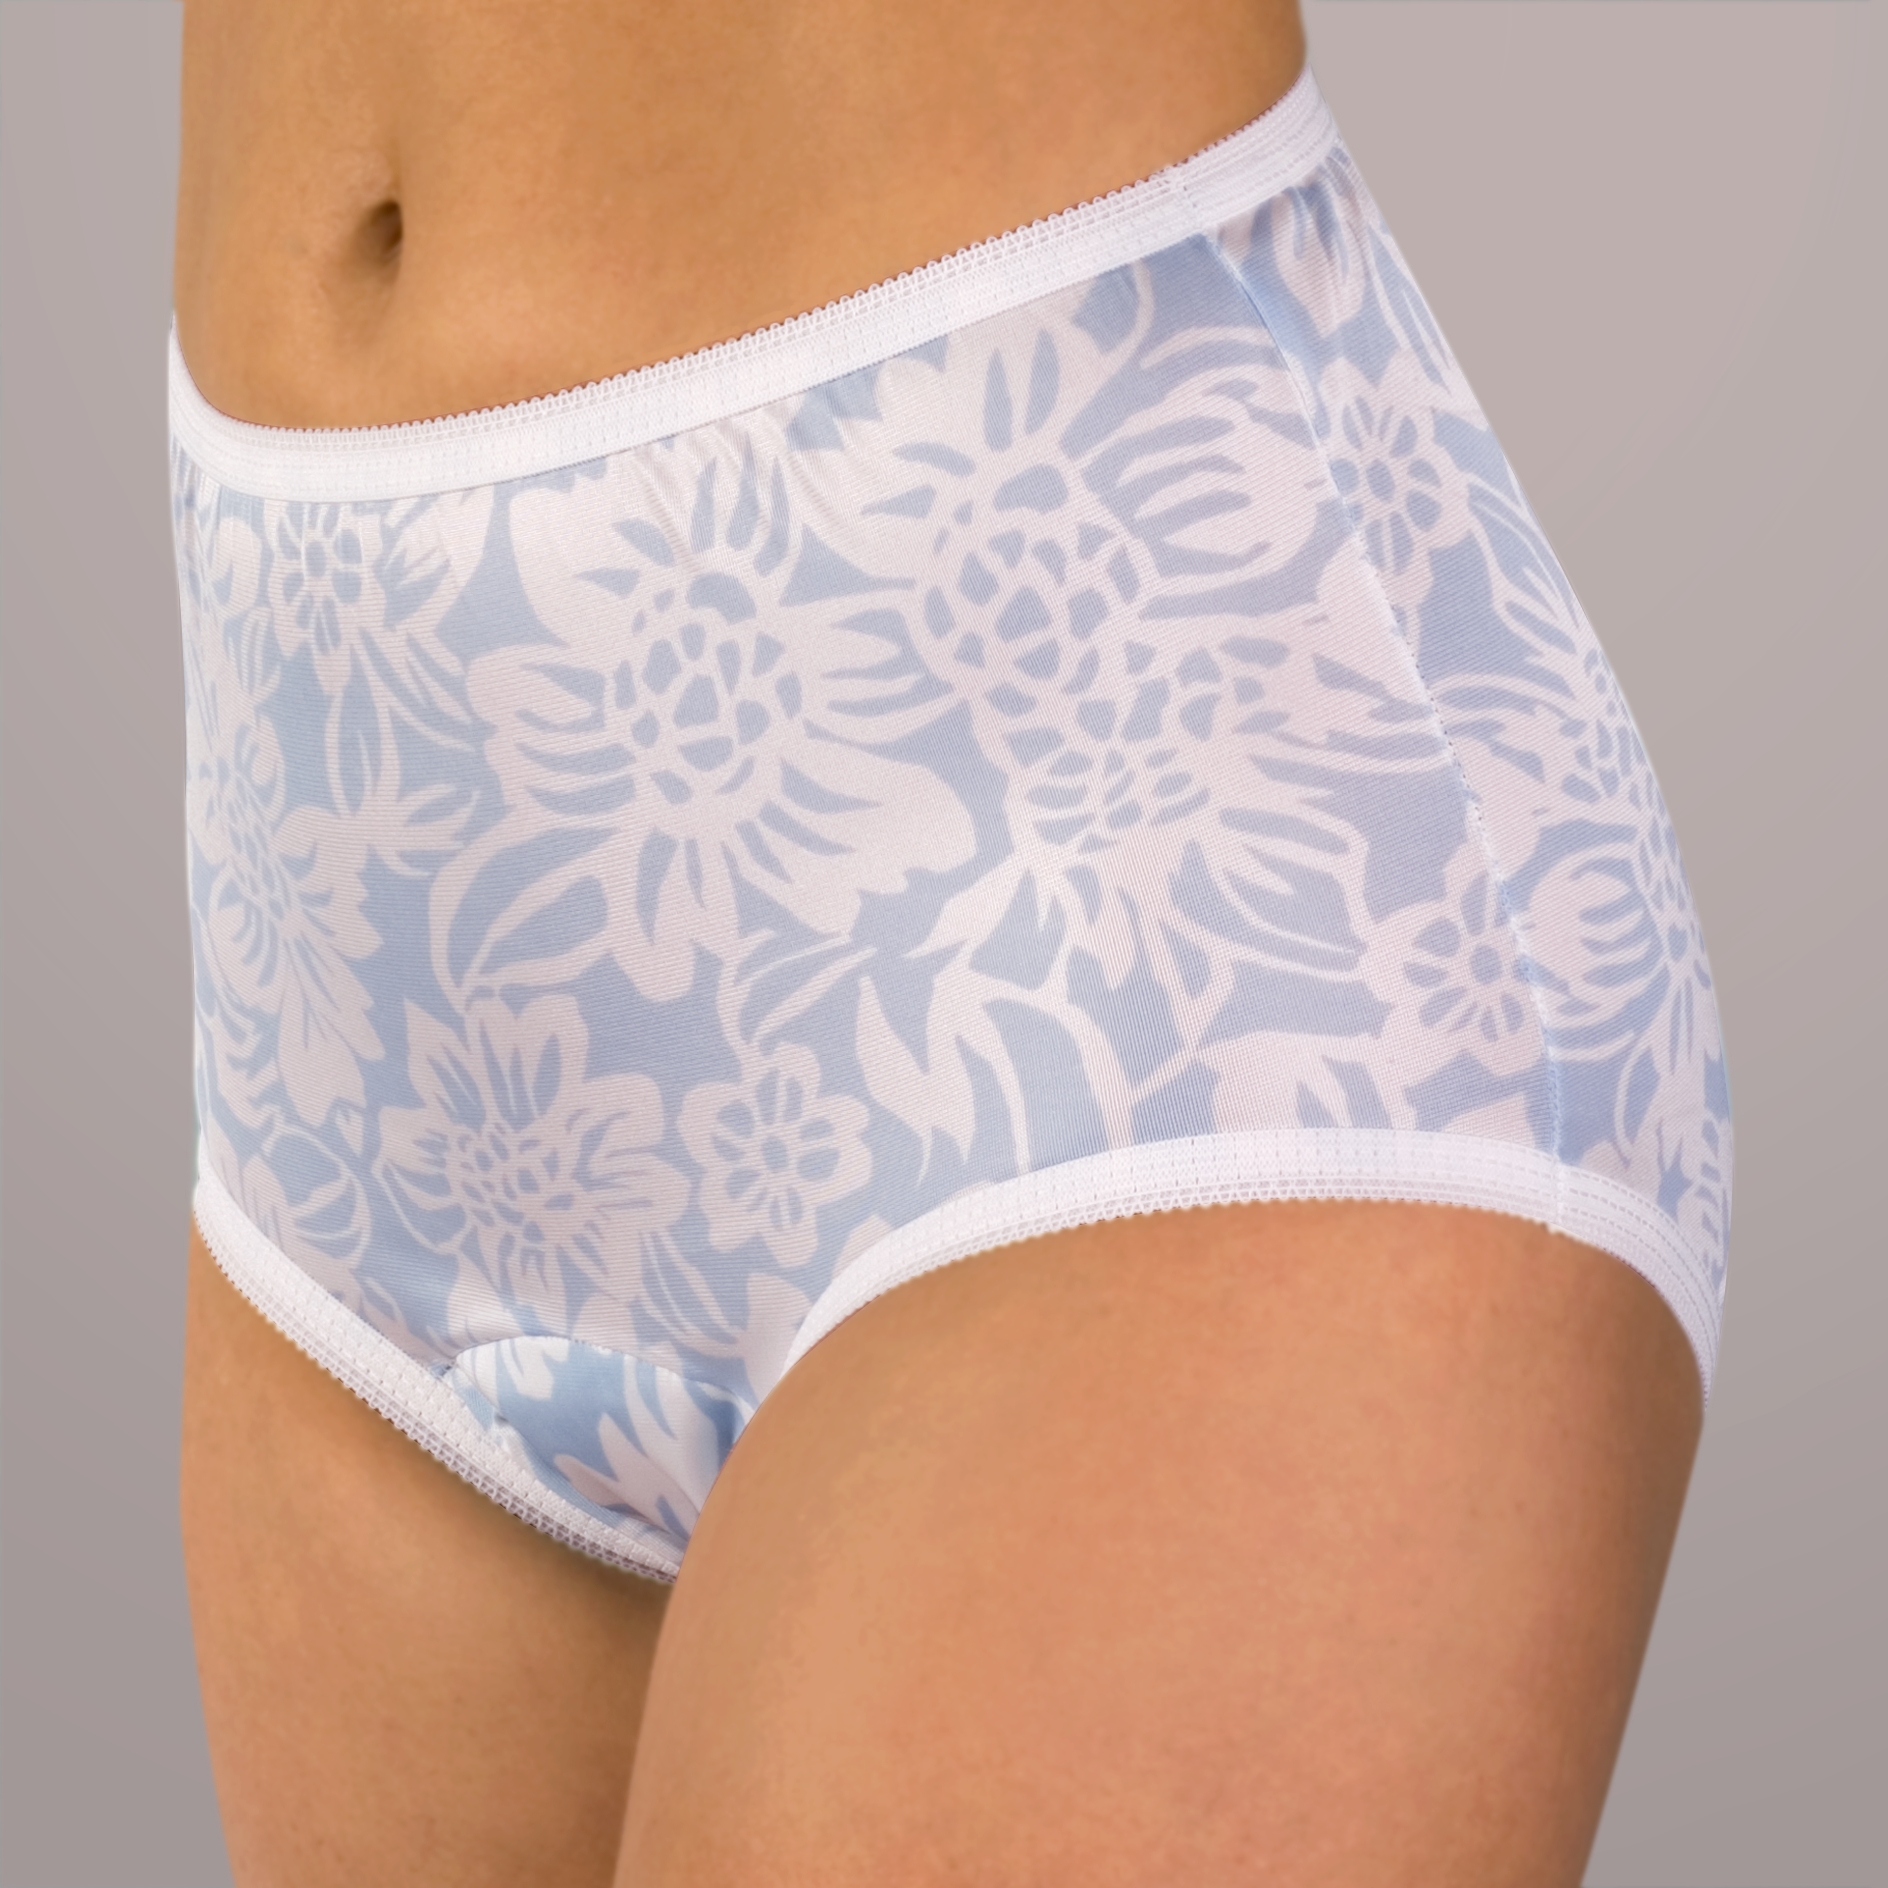 Wearever Women's Incontinence Underwear Reusable Bladder